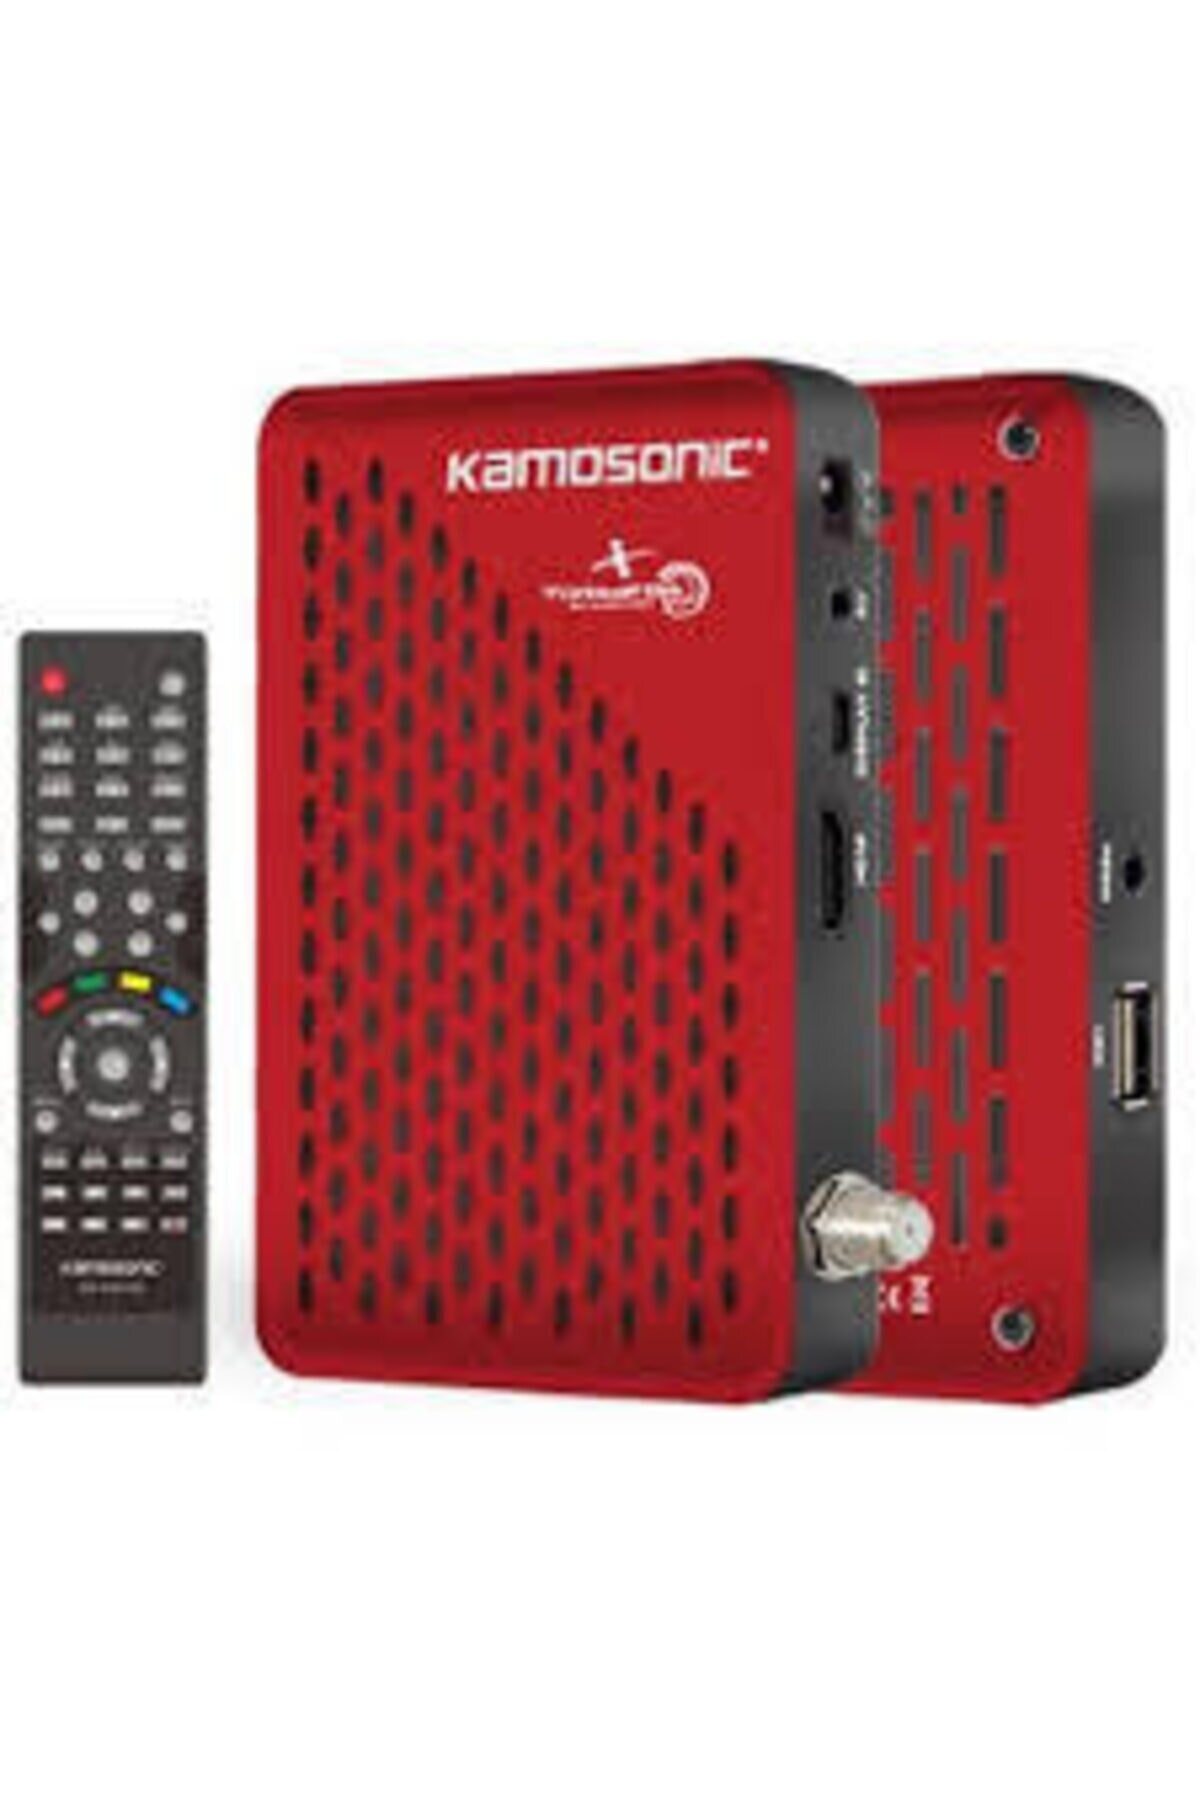 Kamosonic Ks Hd10507 Full Hd Smart İp tv Uydu Alıcısı